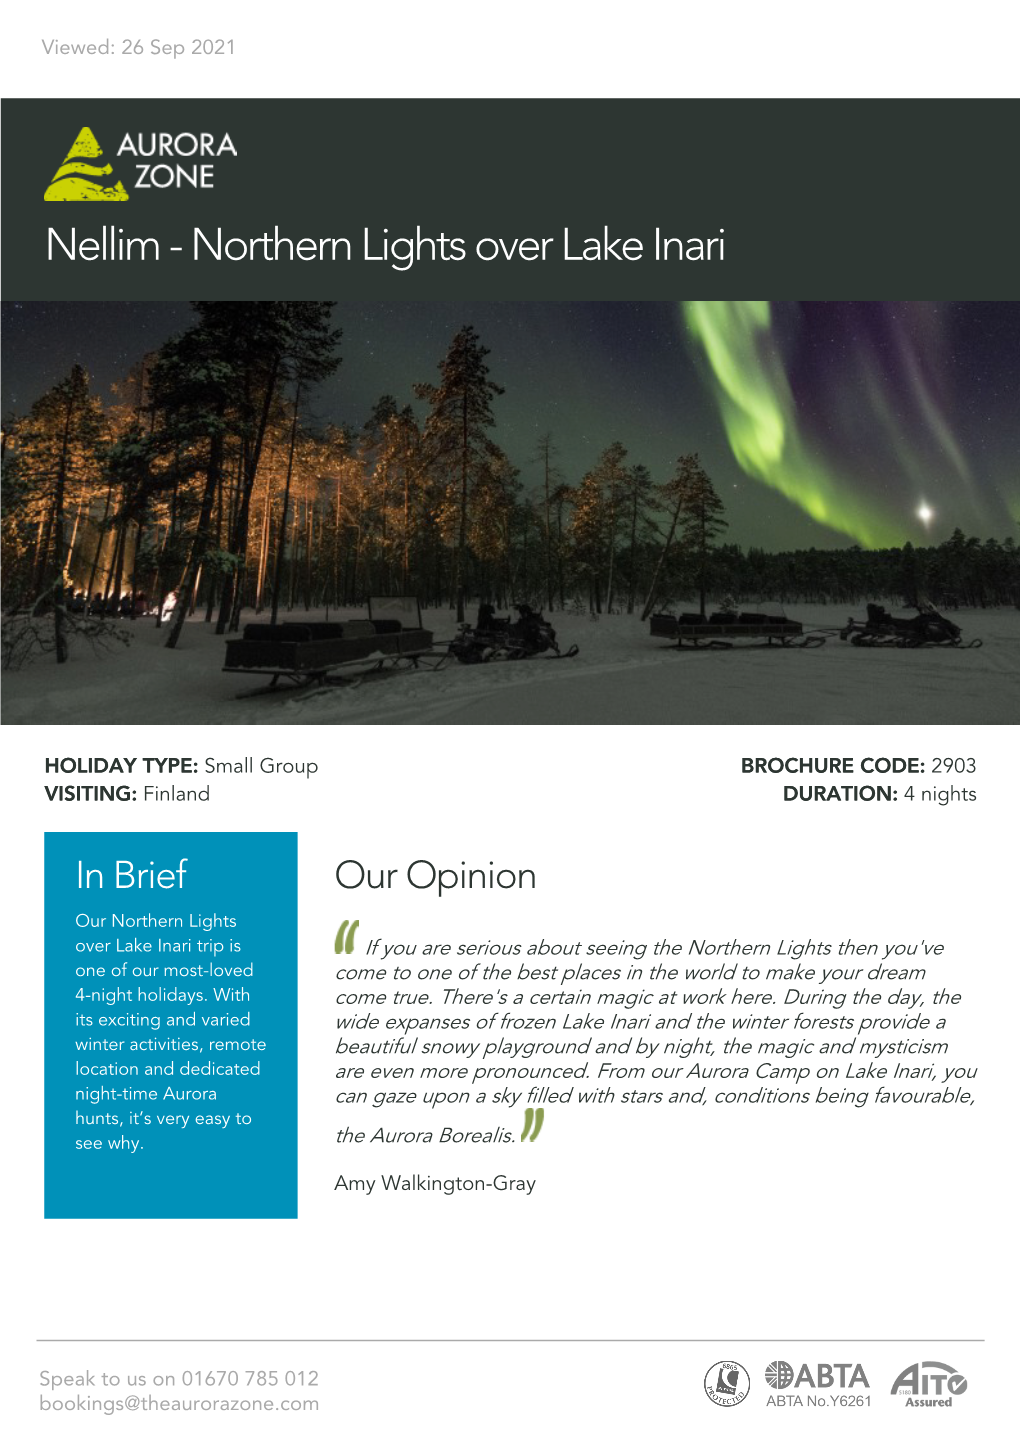 Nellim - Northern Lights Over Lake Inari